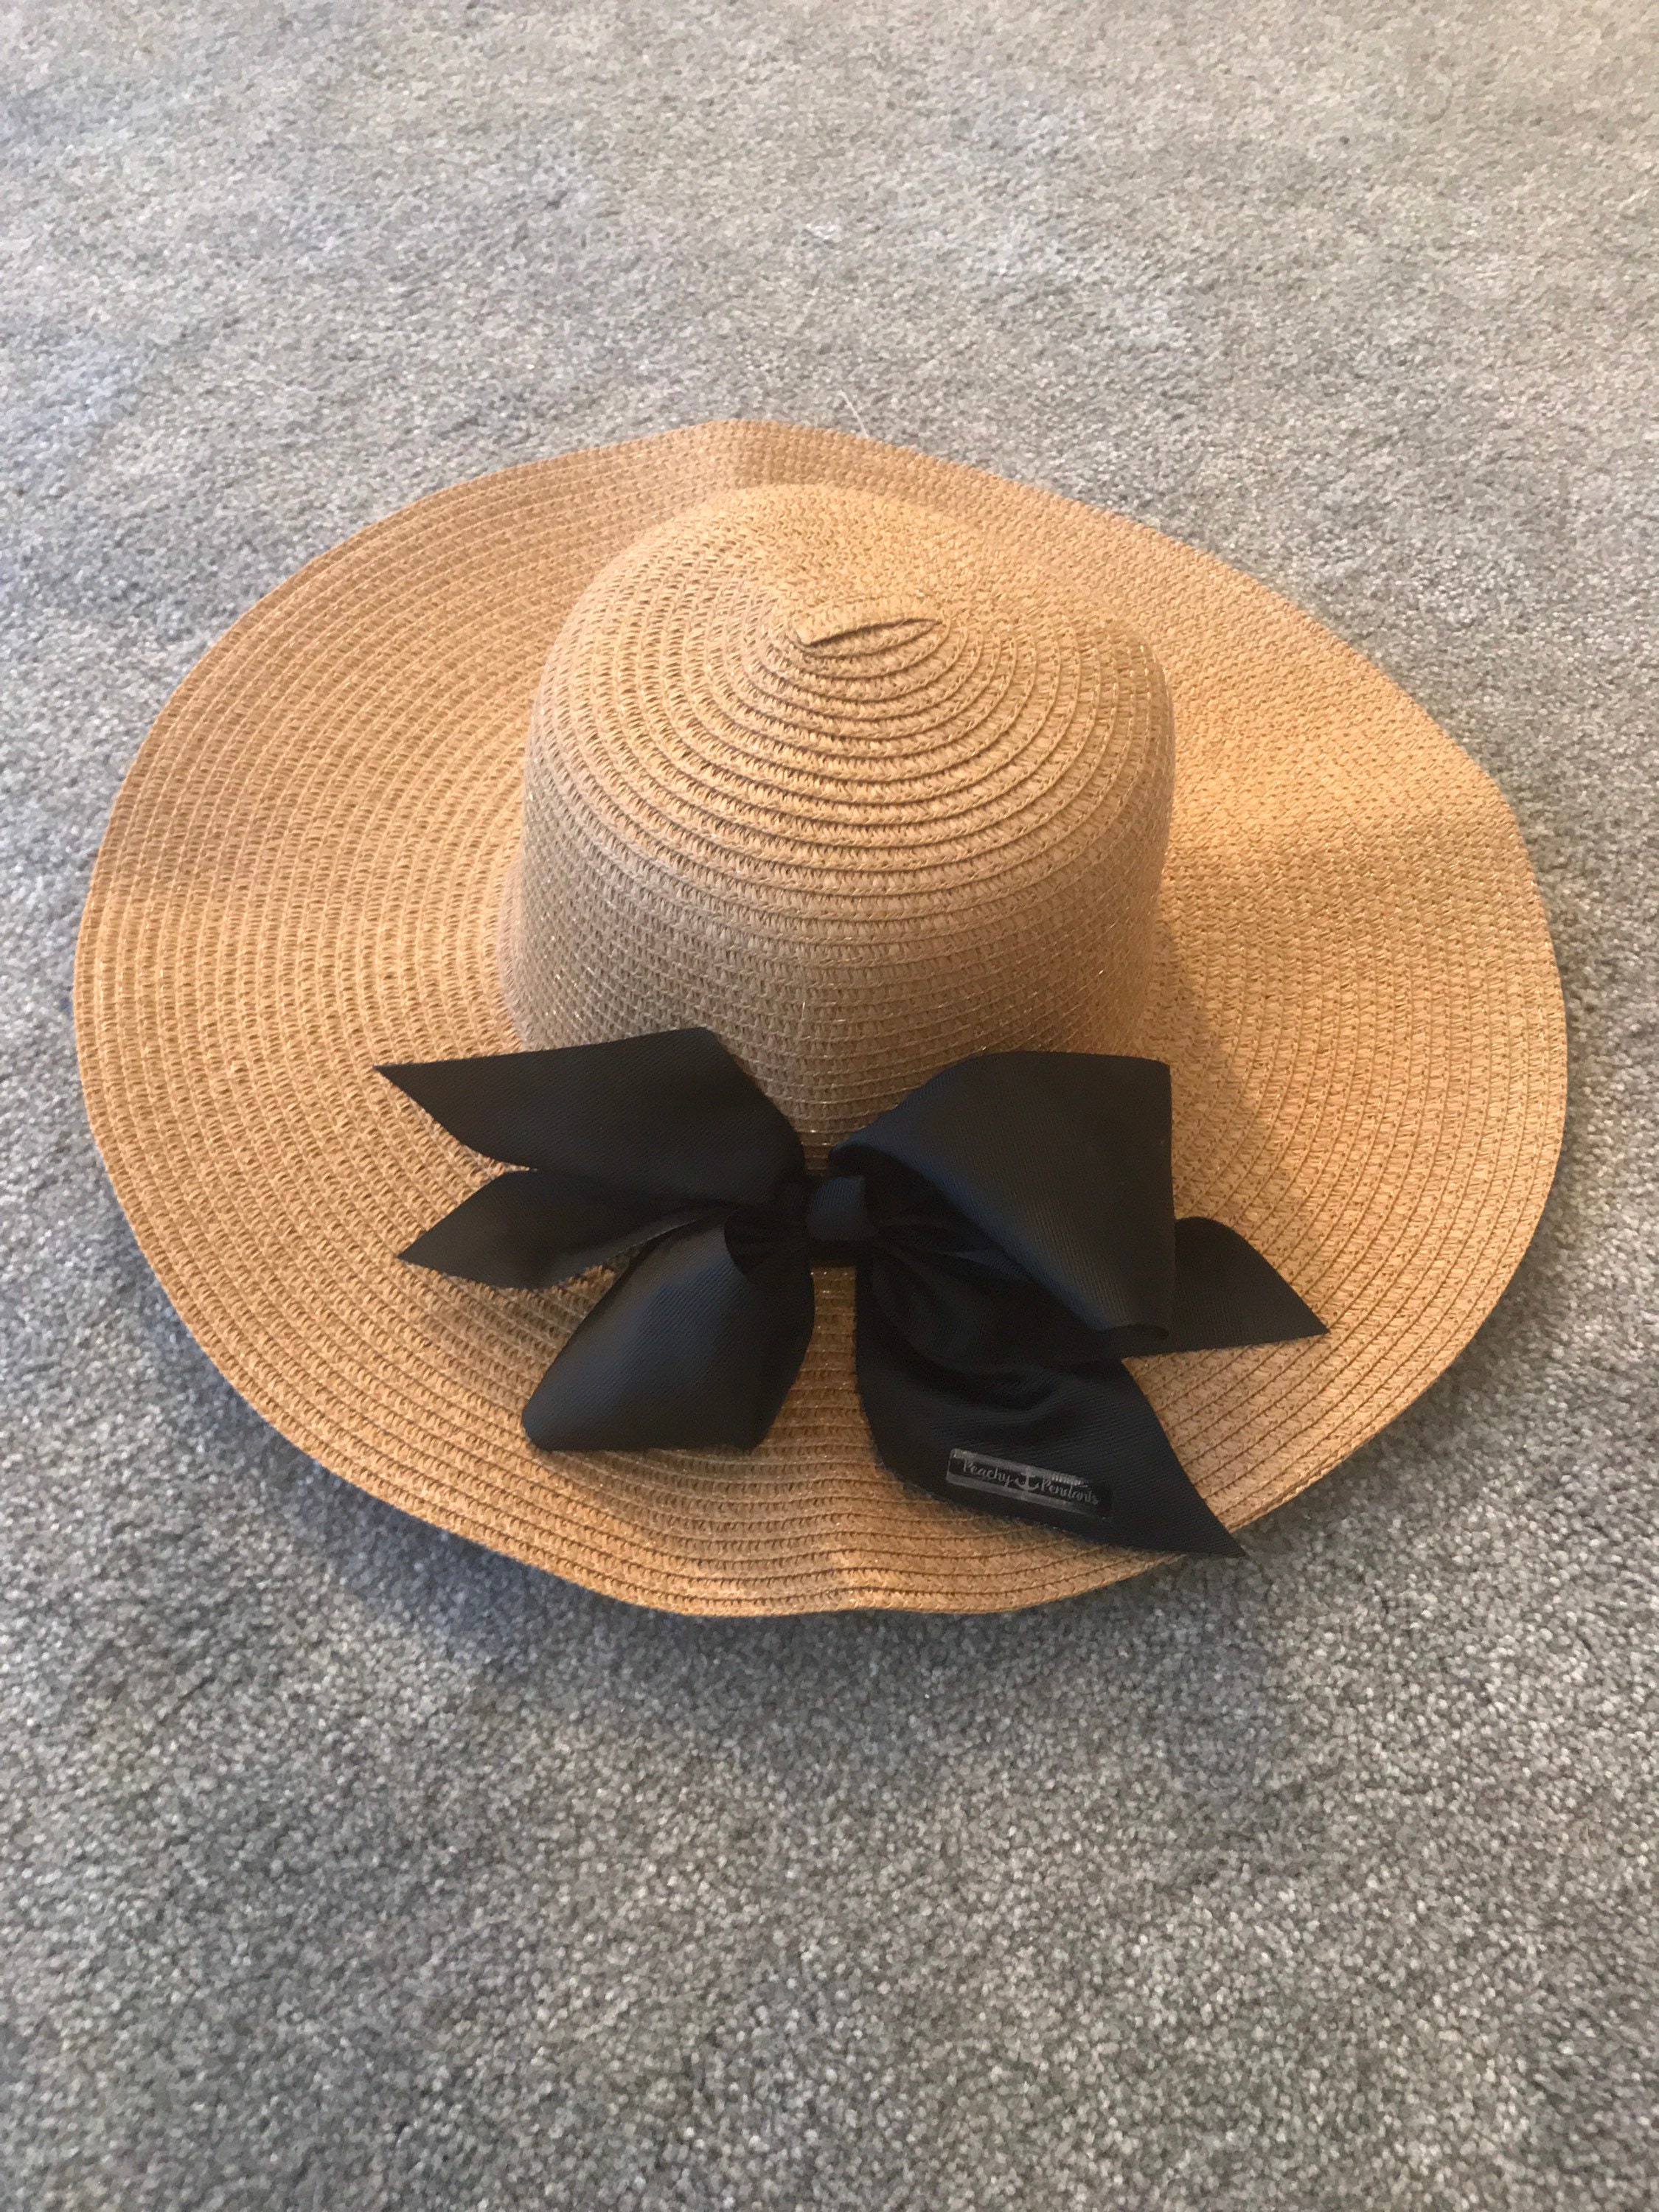 Khaki Wide Brim Sun Hats for Women - Floppy Straw Hat-FUNCREDIBLE